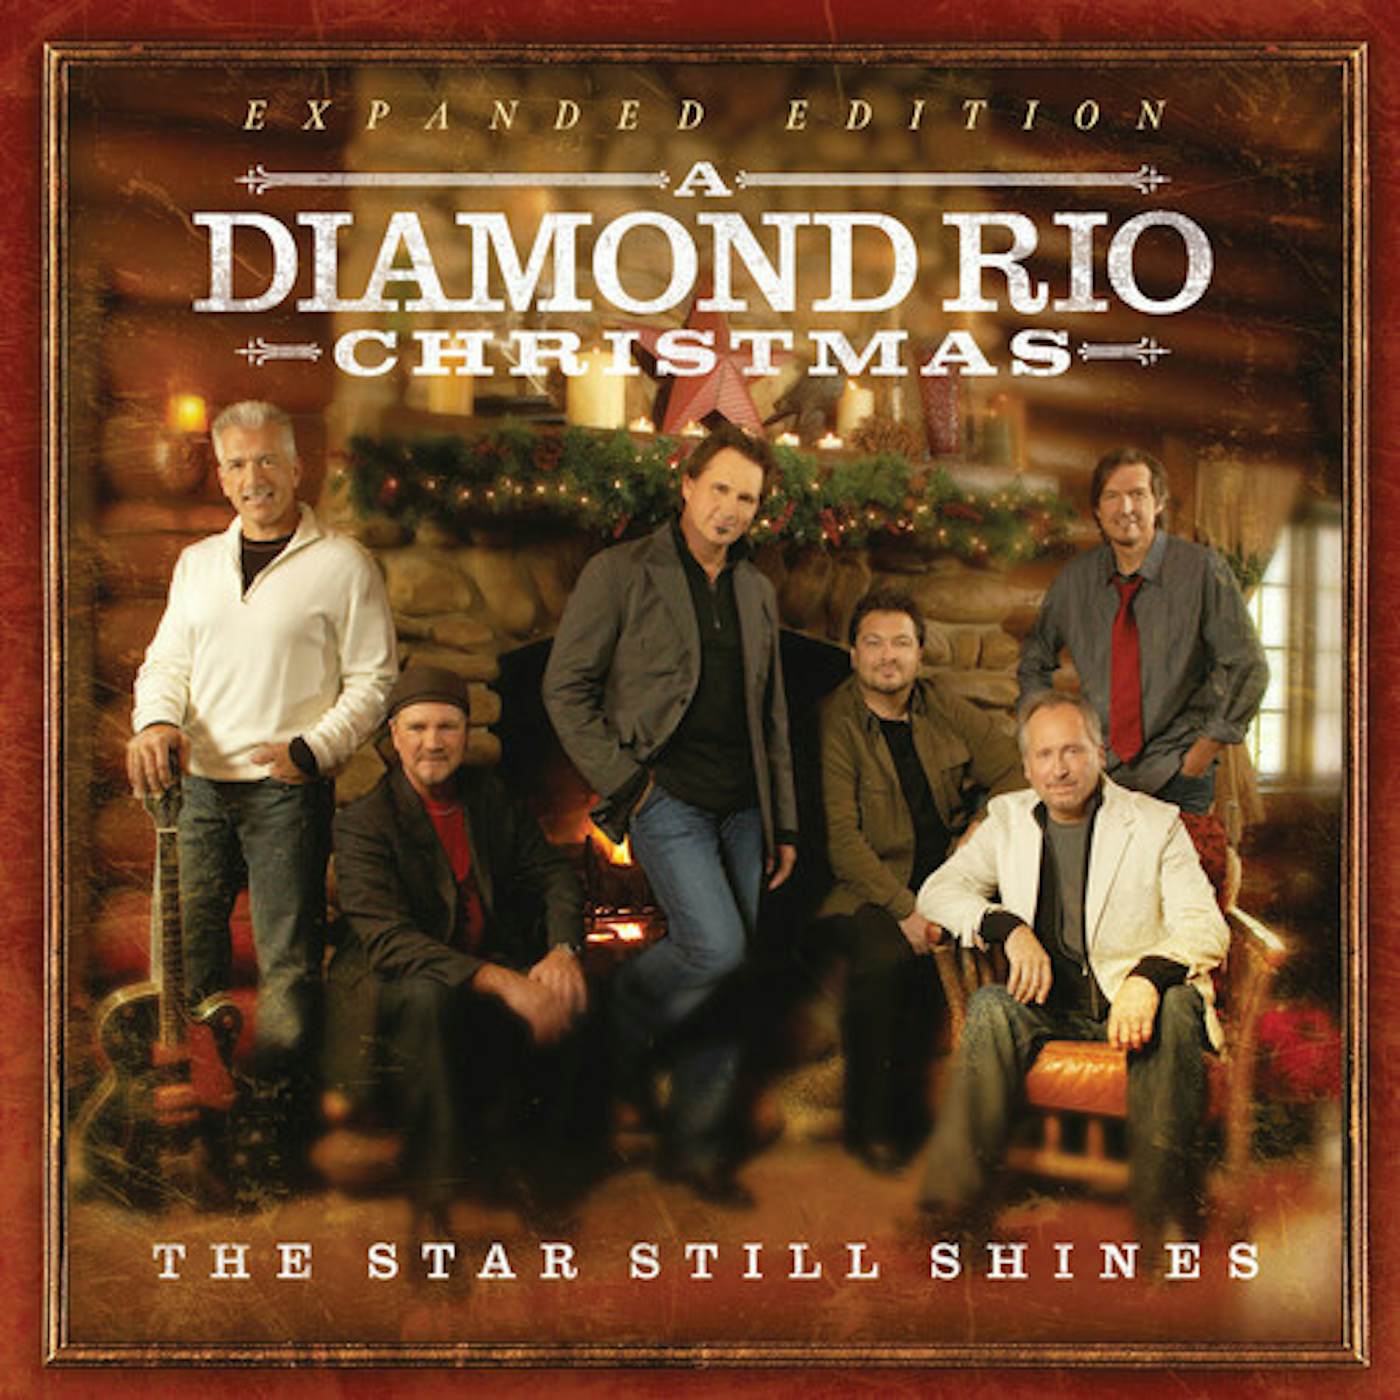 STAR STILL SHINES: A DIAMOND RIO CHRISTMAS CD